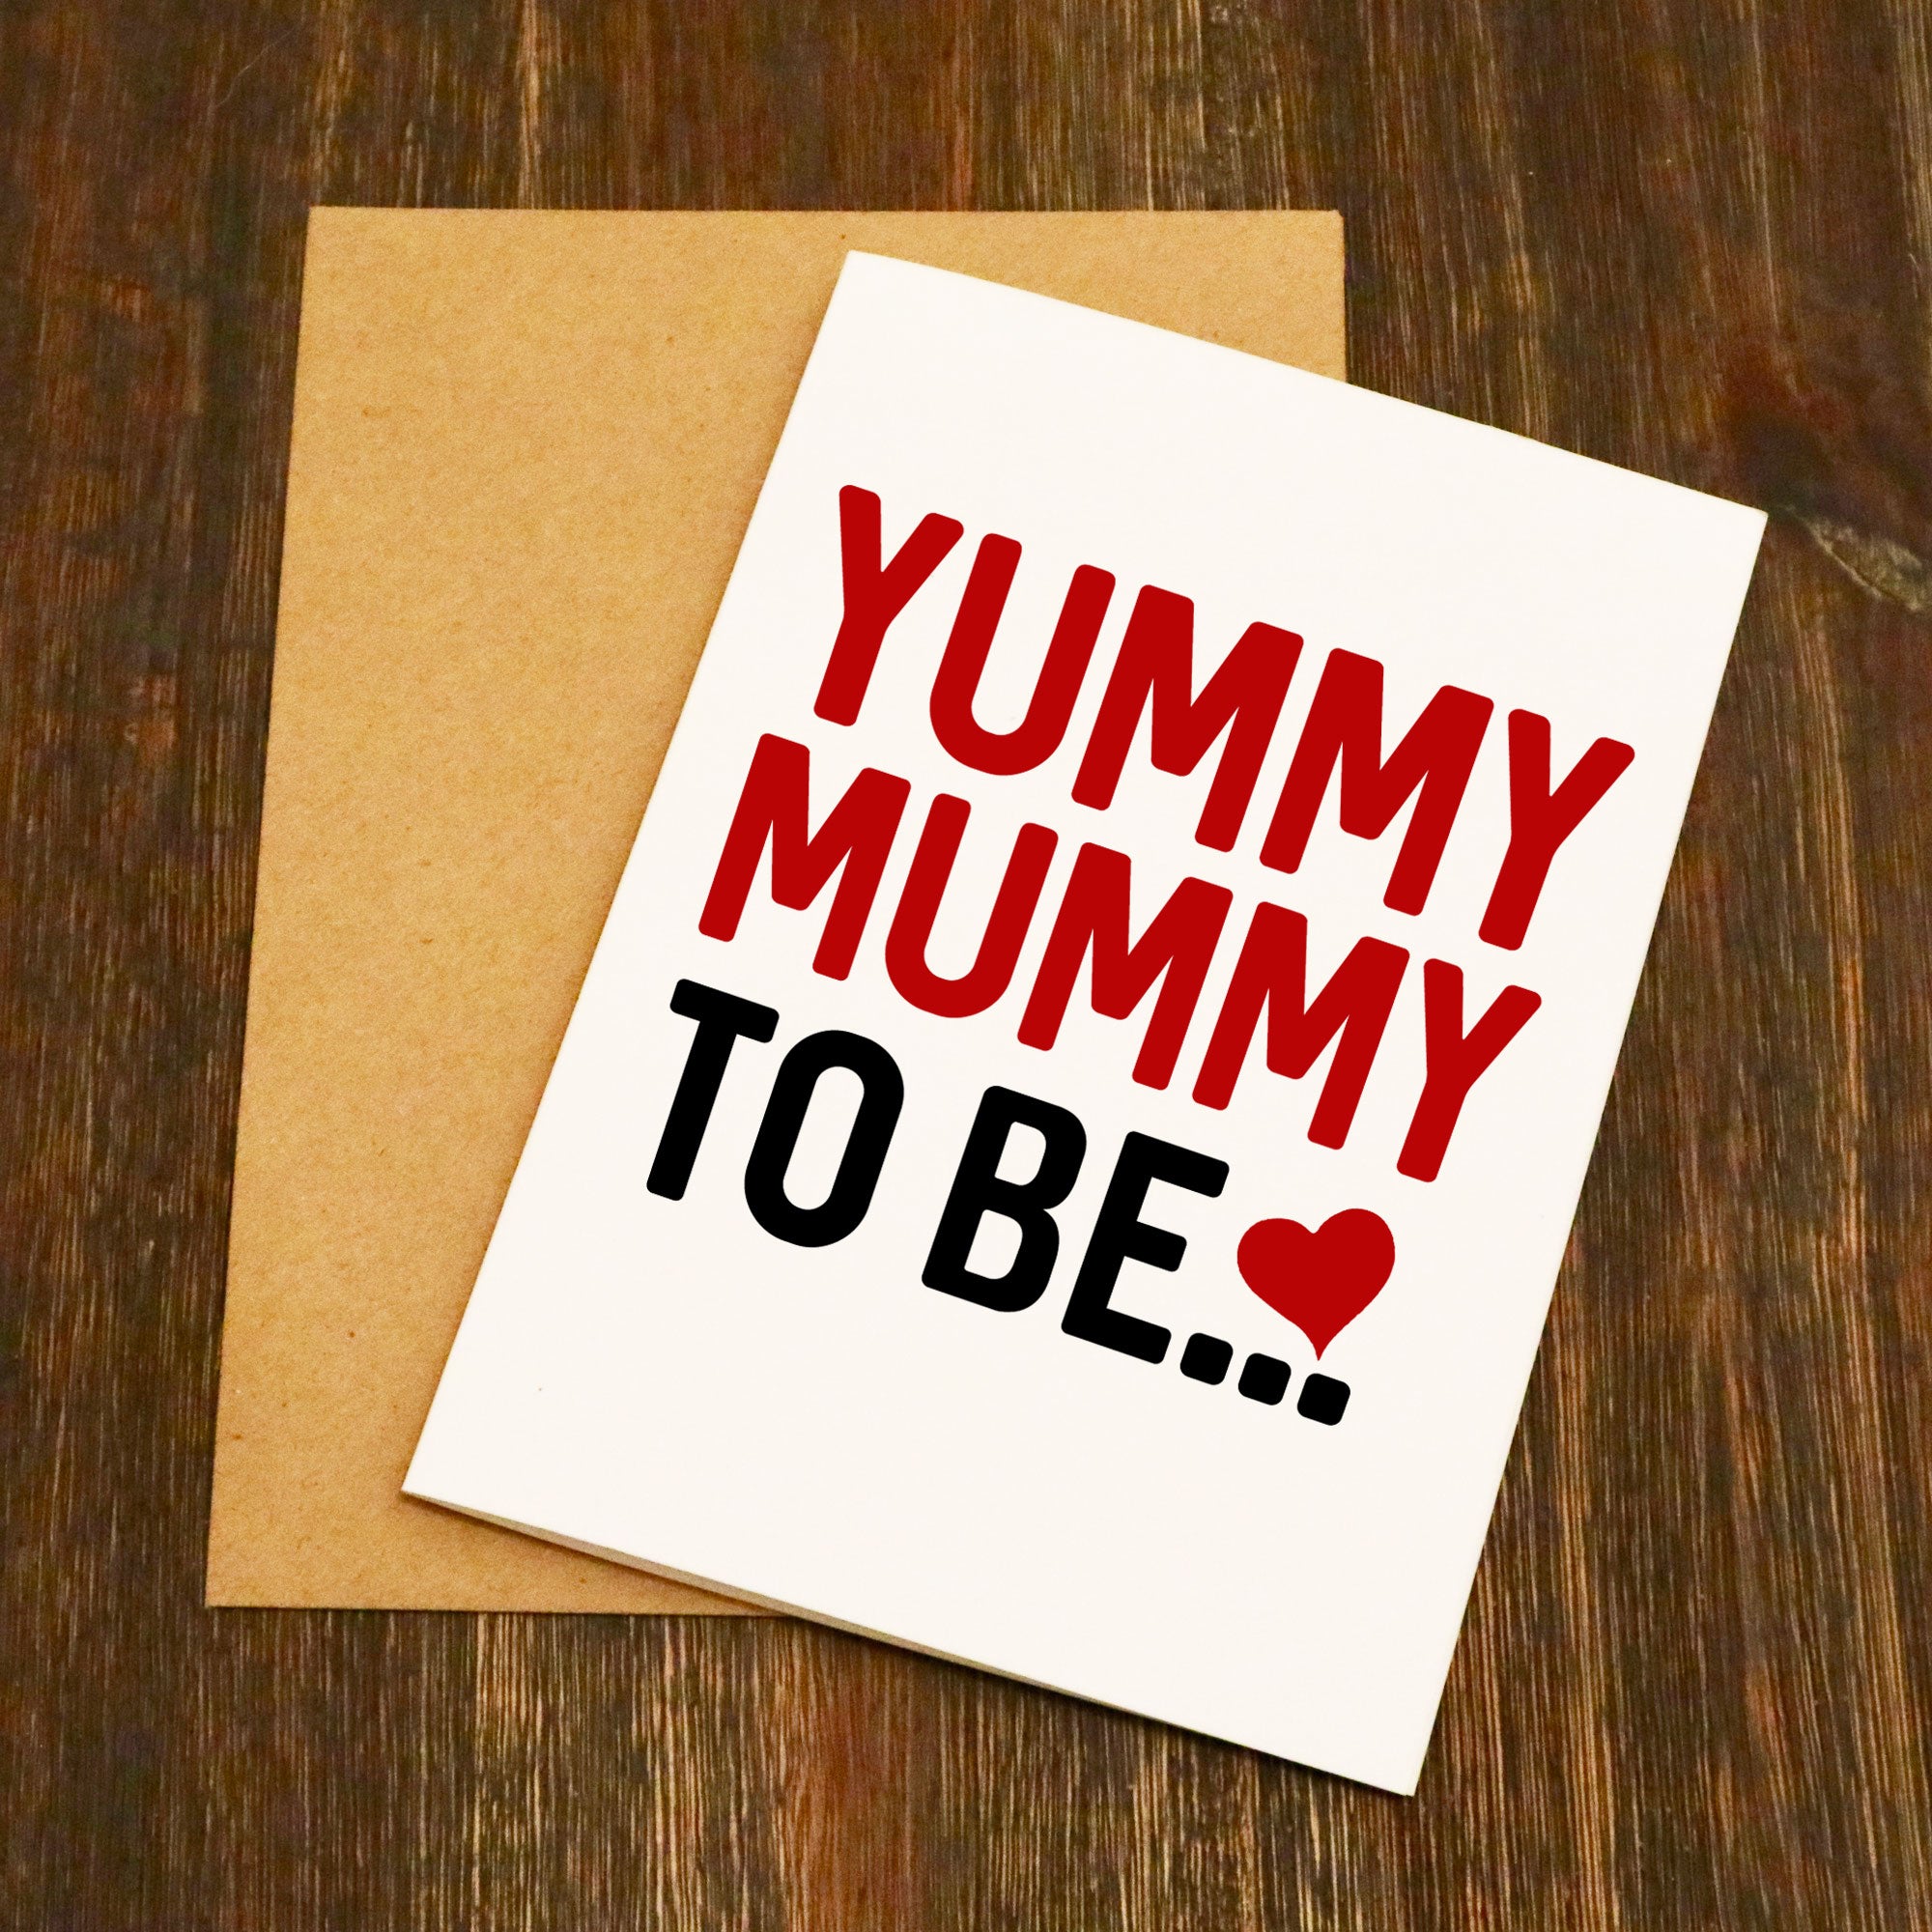 Bold Yummy Mummy To Be... Greetings Card